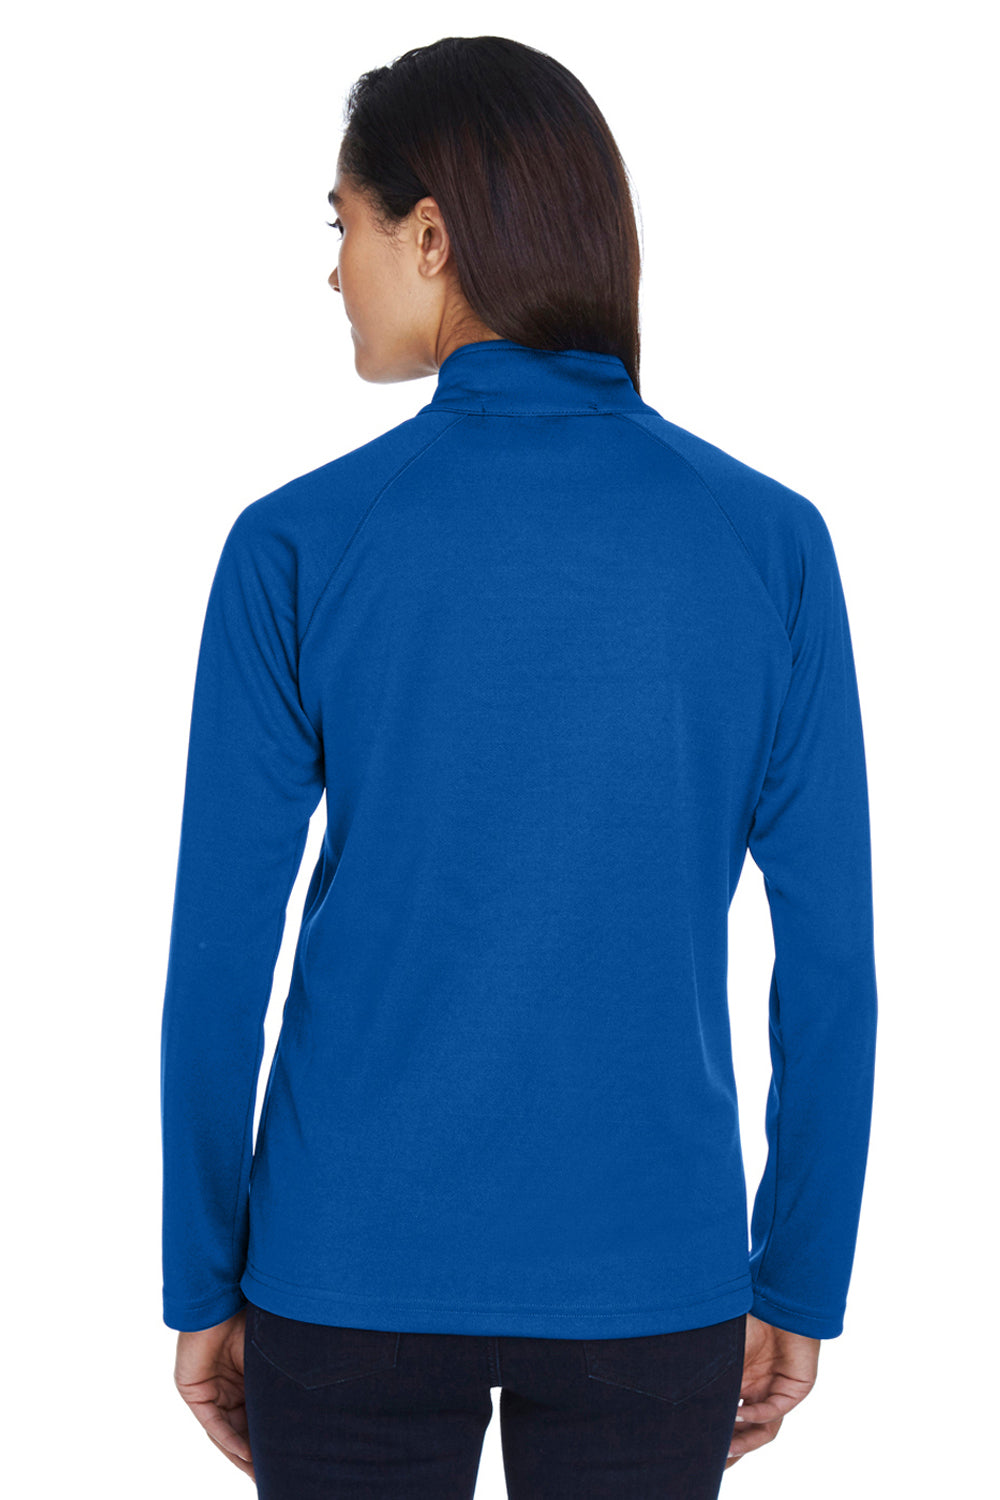 Devon & Jones DG420W Womens Compass Stretch Tech Moisture Wicking Full Zip Sweatshirt Royal Blue Back